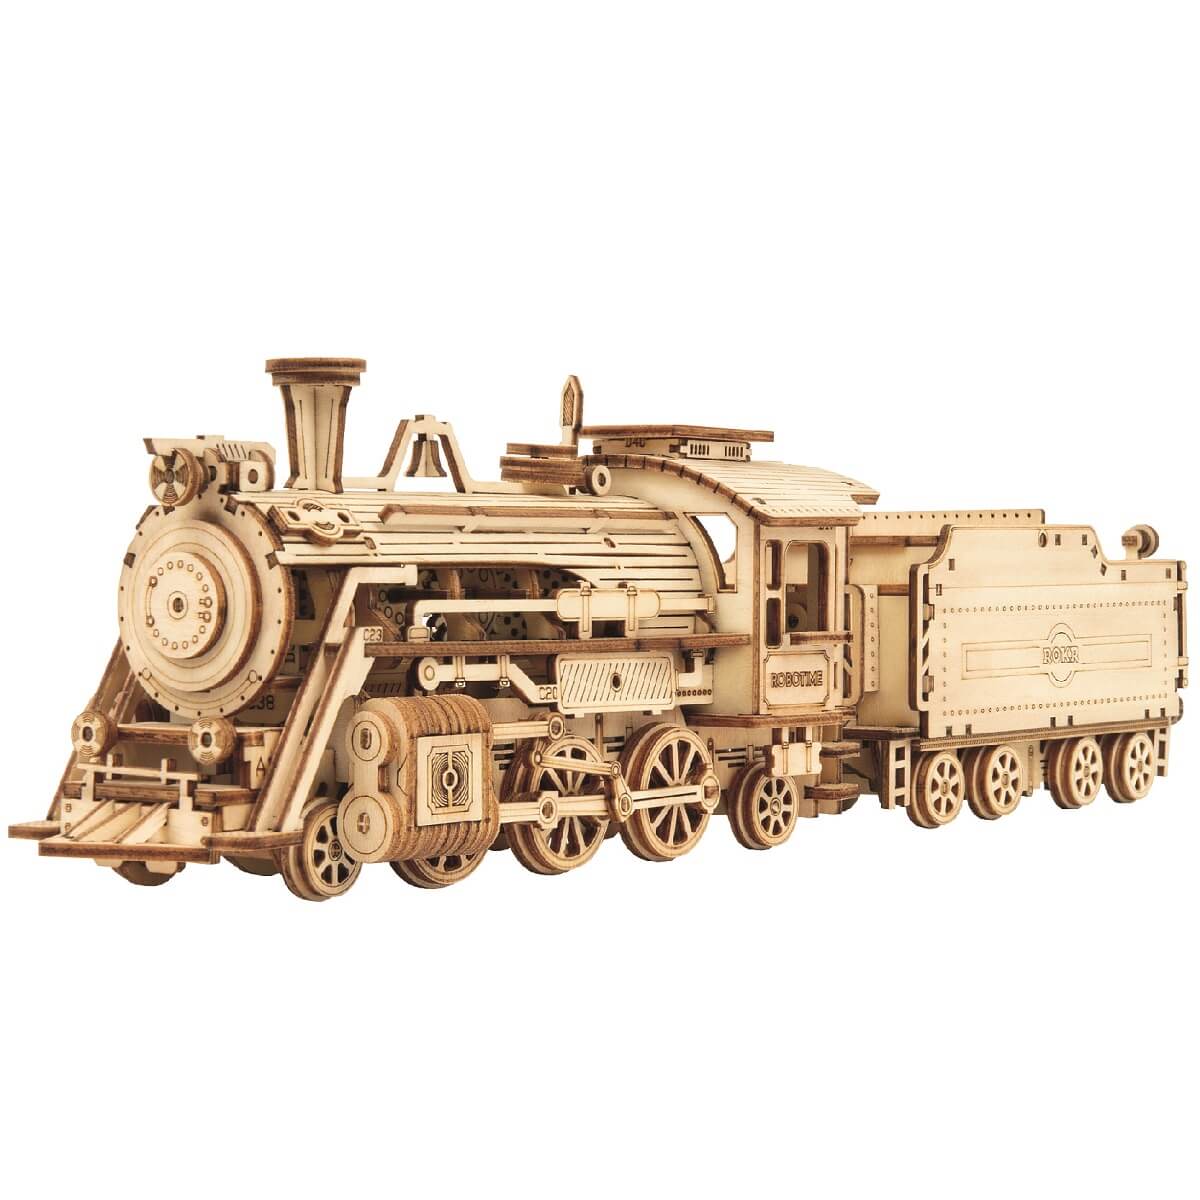 Robotime houten puzzel Prime Steam Expres